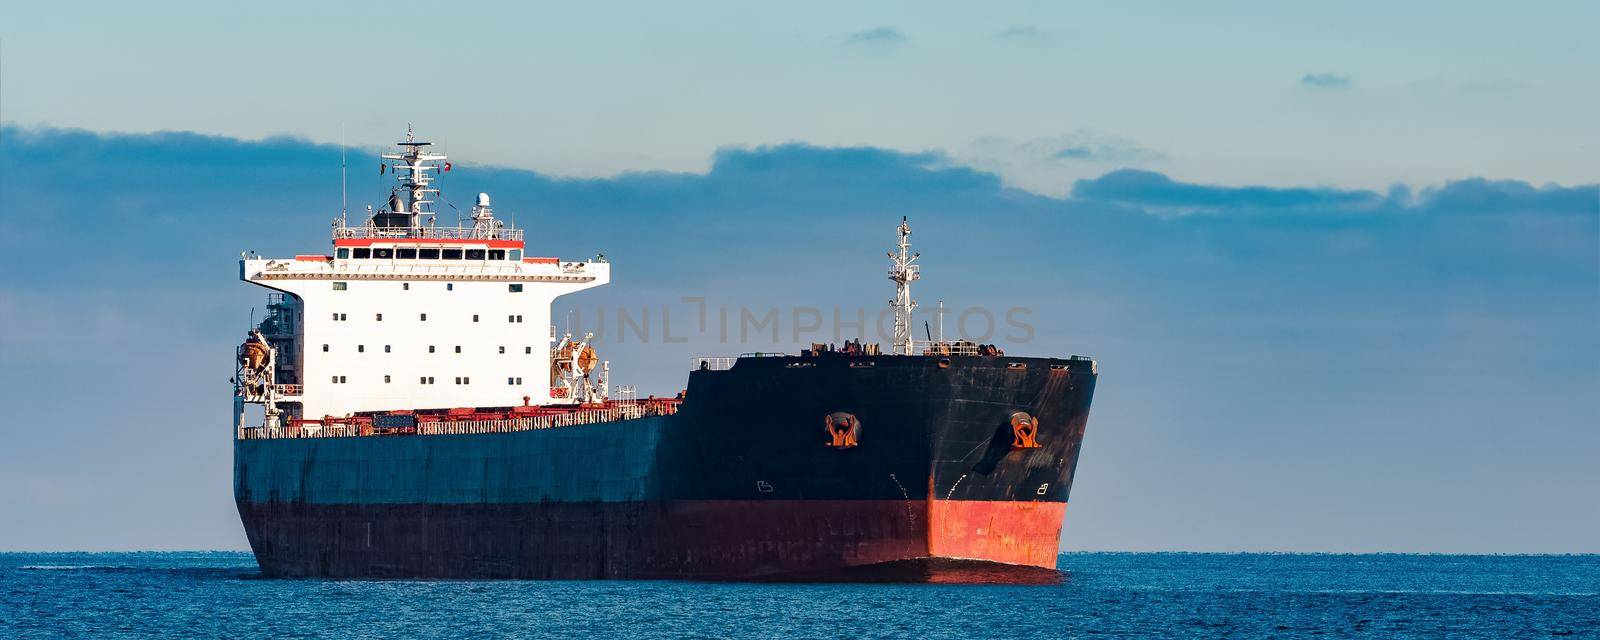 Black cargo ship by InfinitumProdux